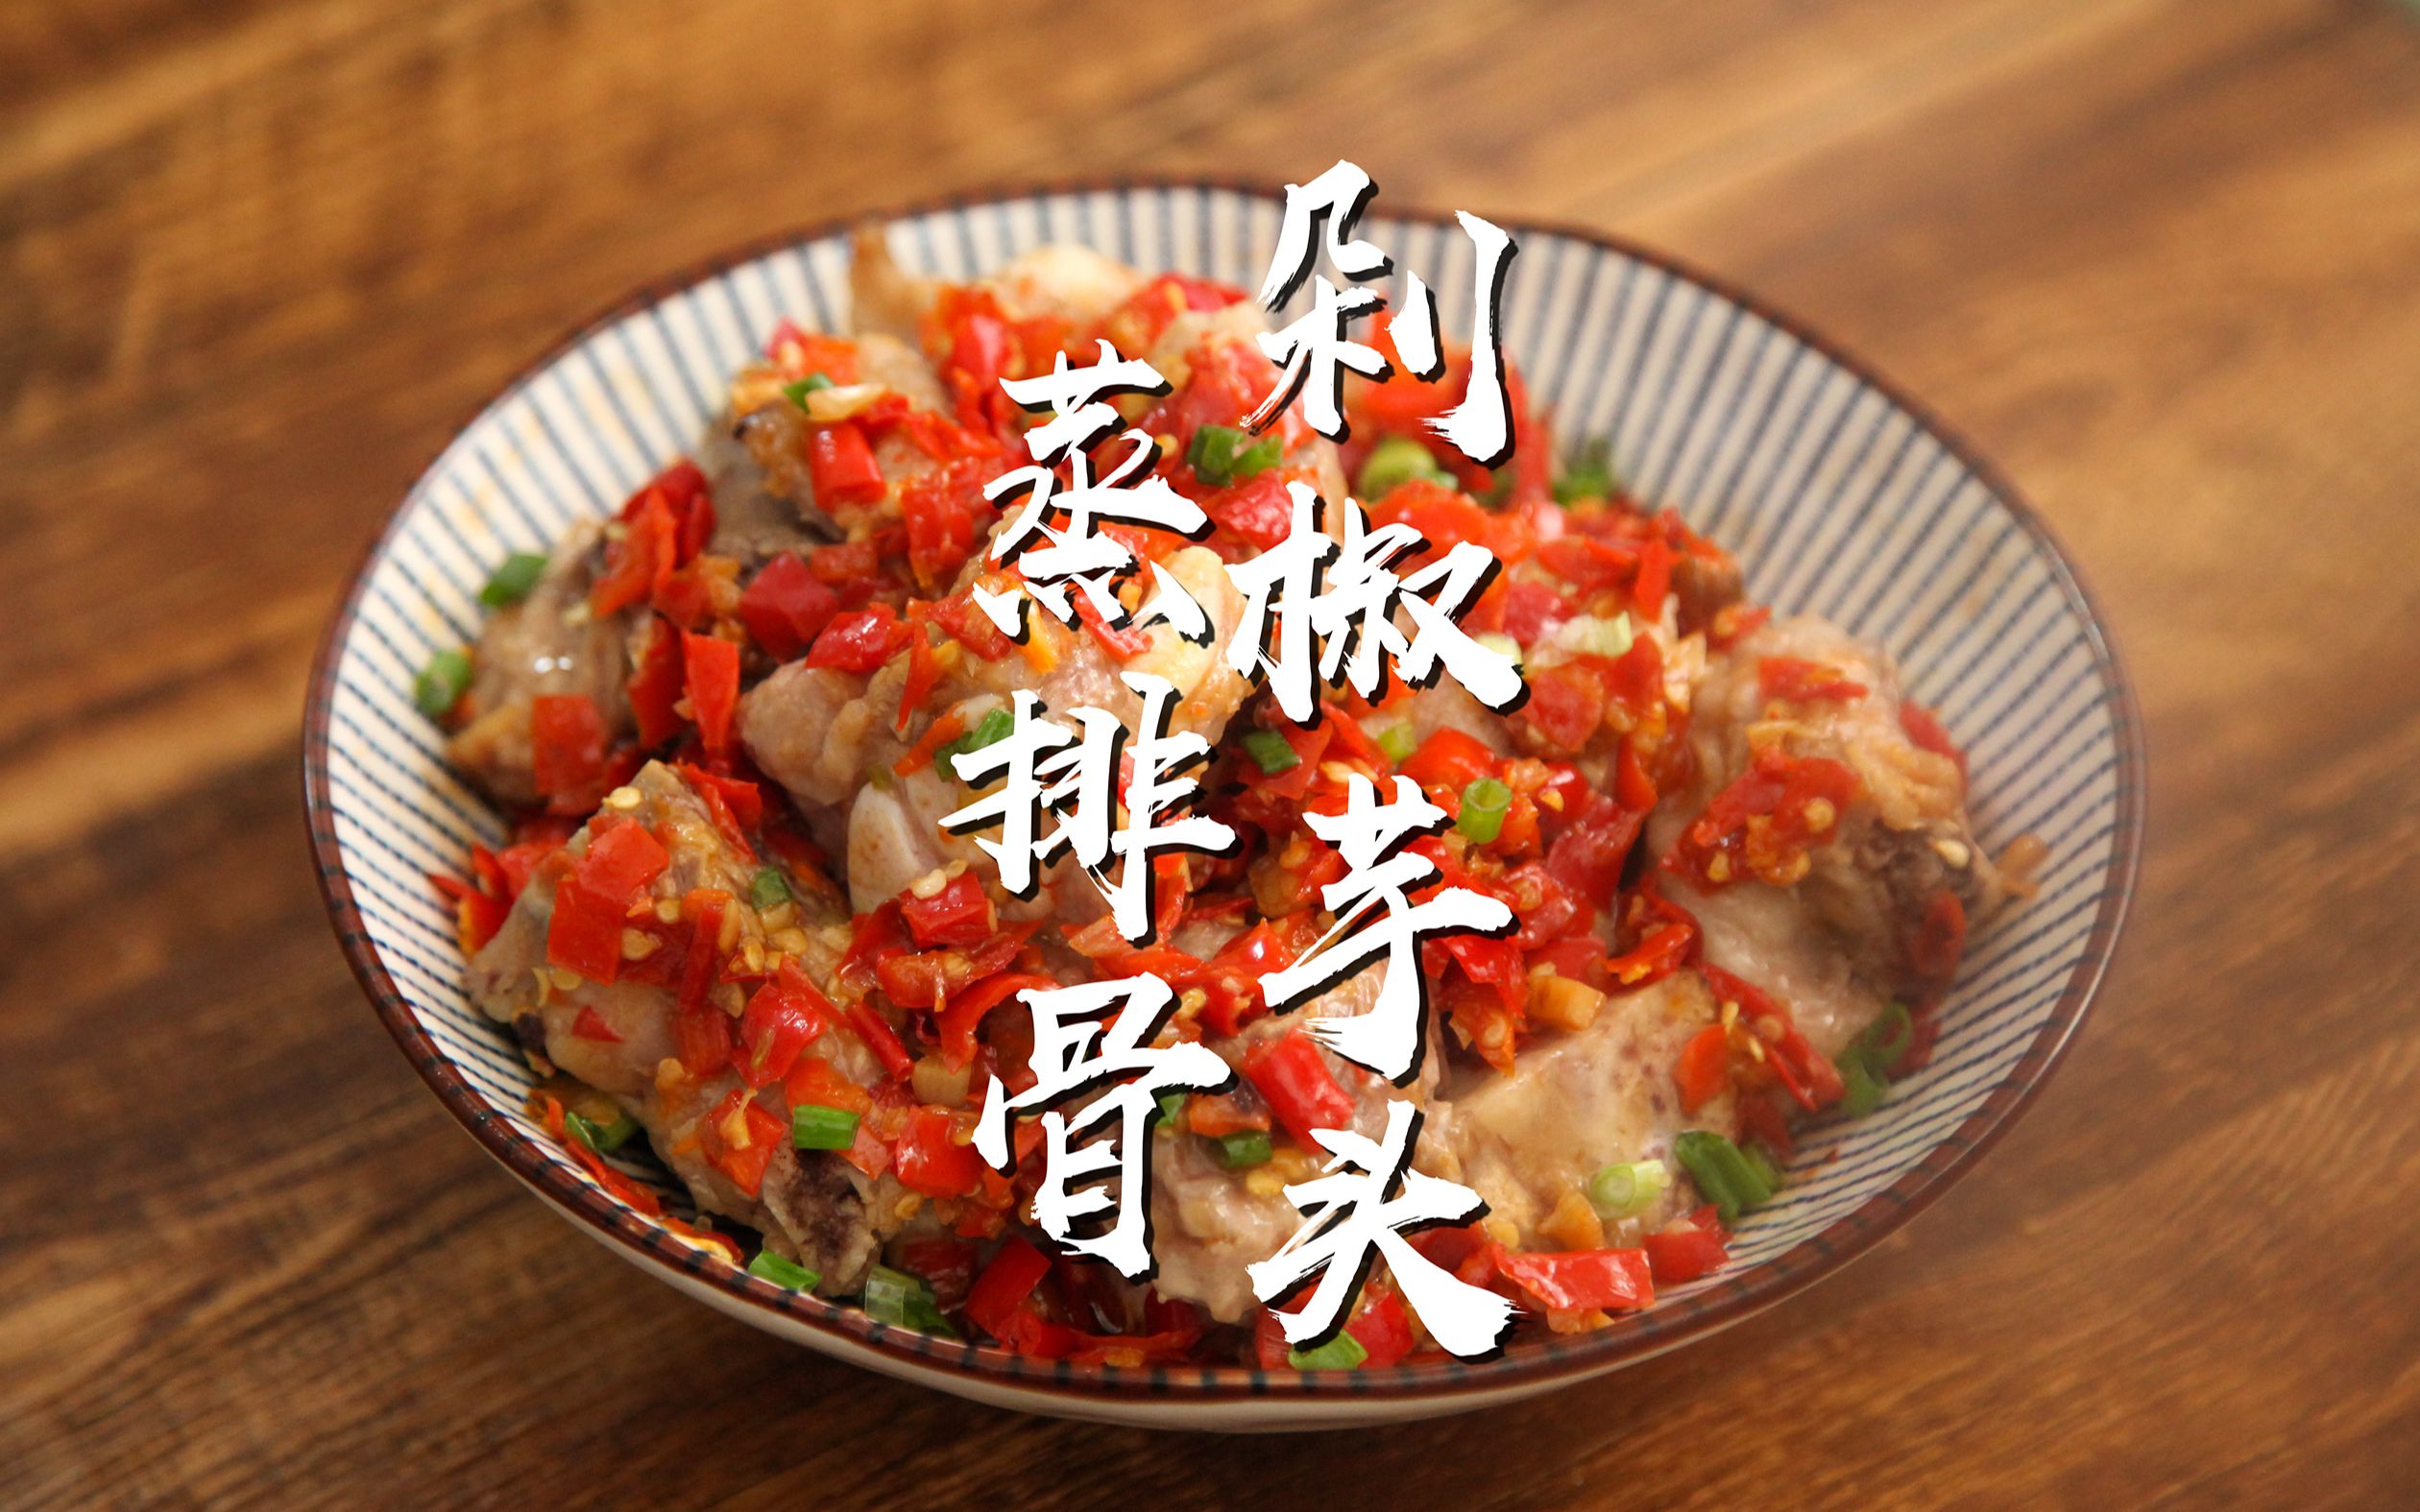 湖南剁椒芋头做法，想要芋头口感不硬，第一步非常重要_哔哩哔哩 (゜-゜)つロ 干杯~-bilibili